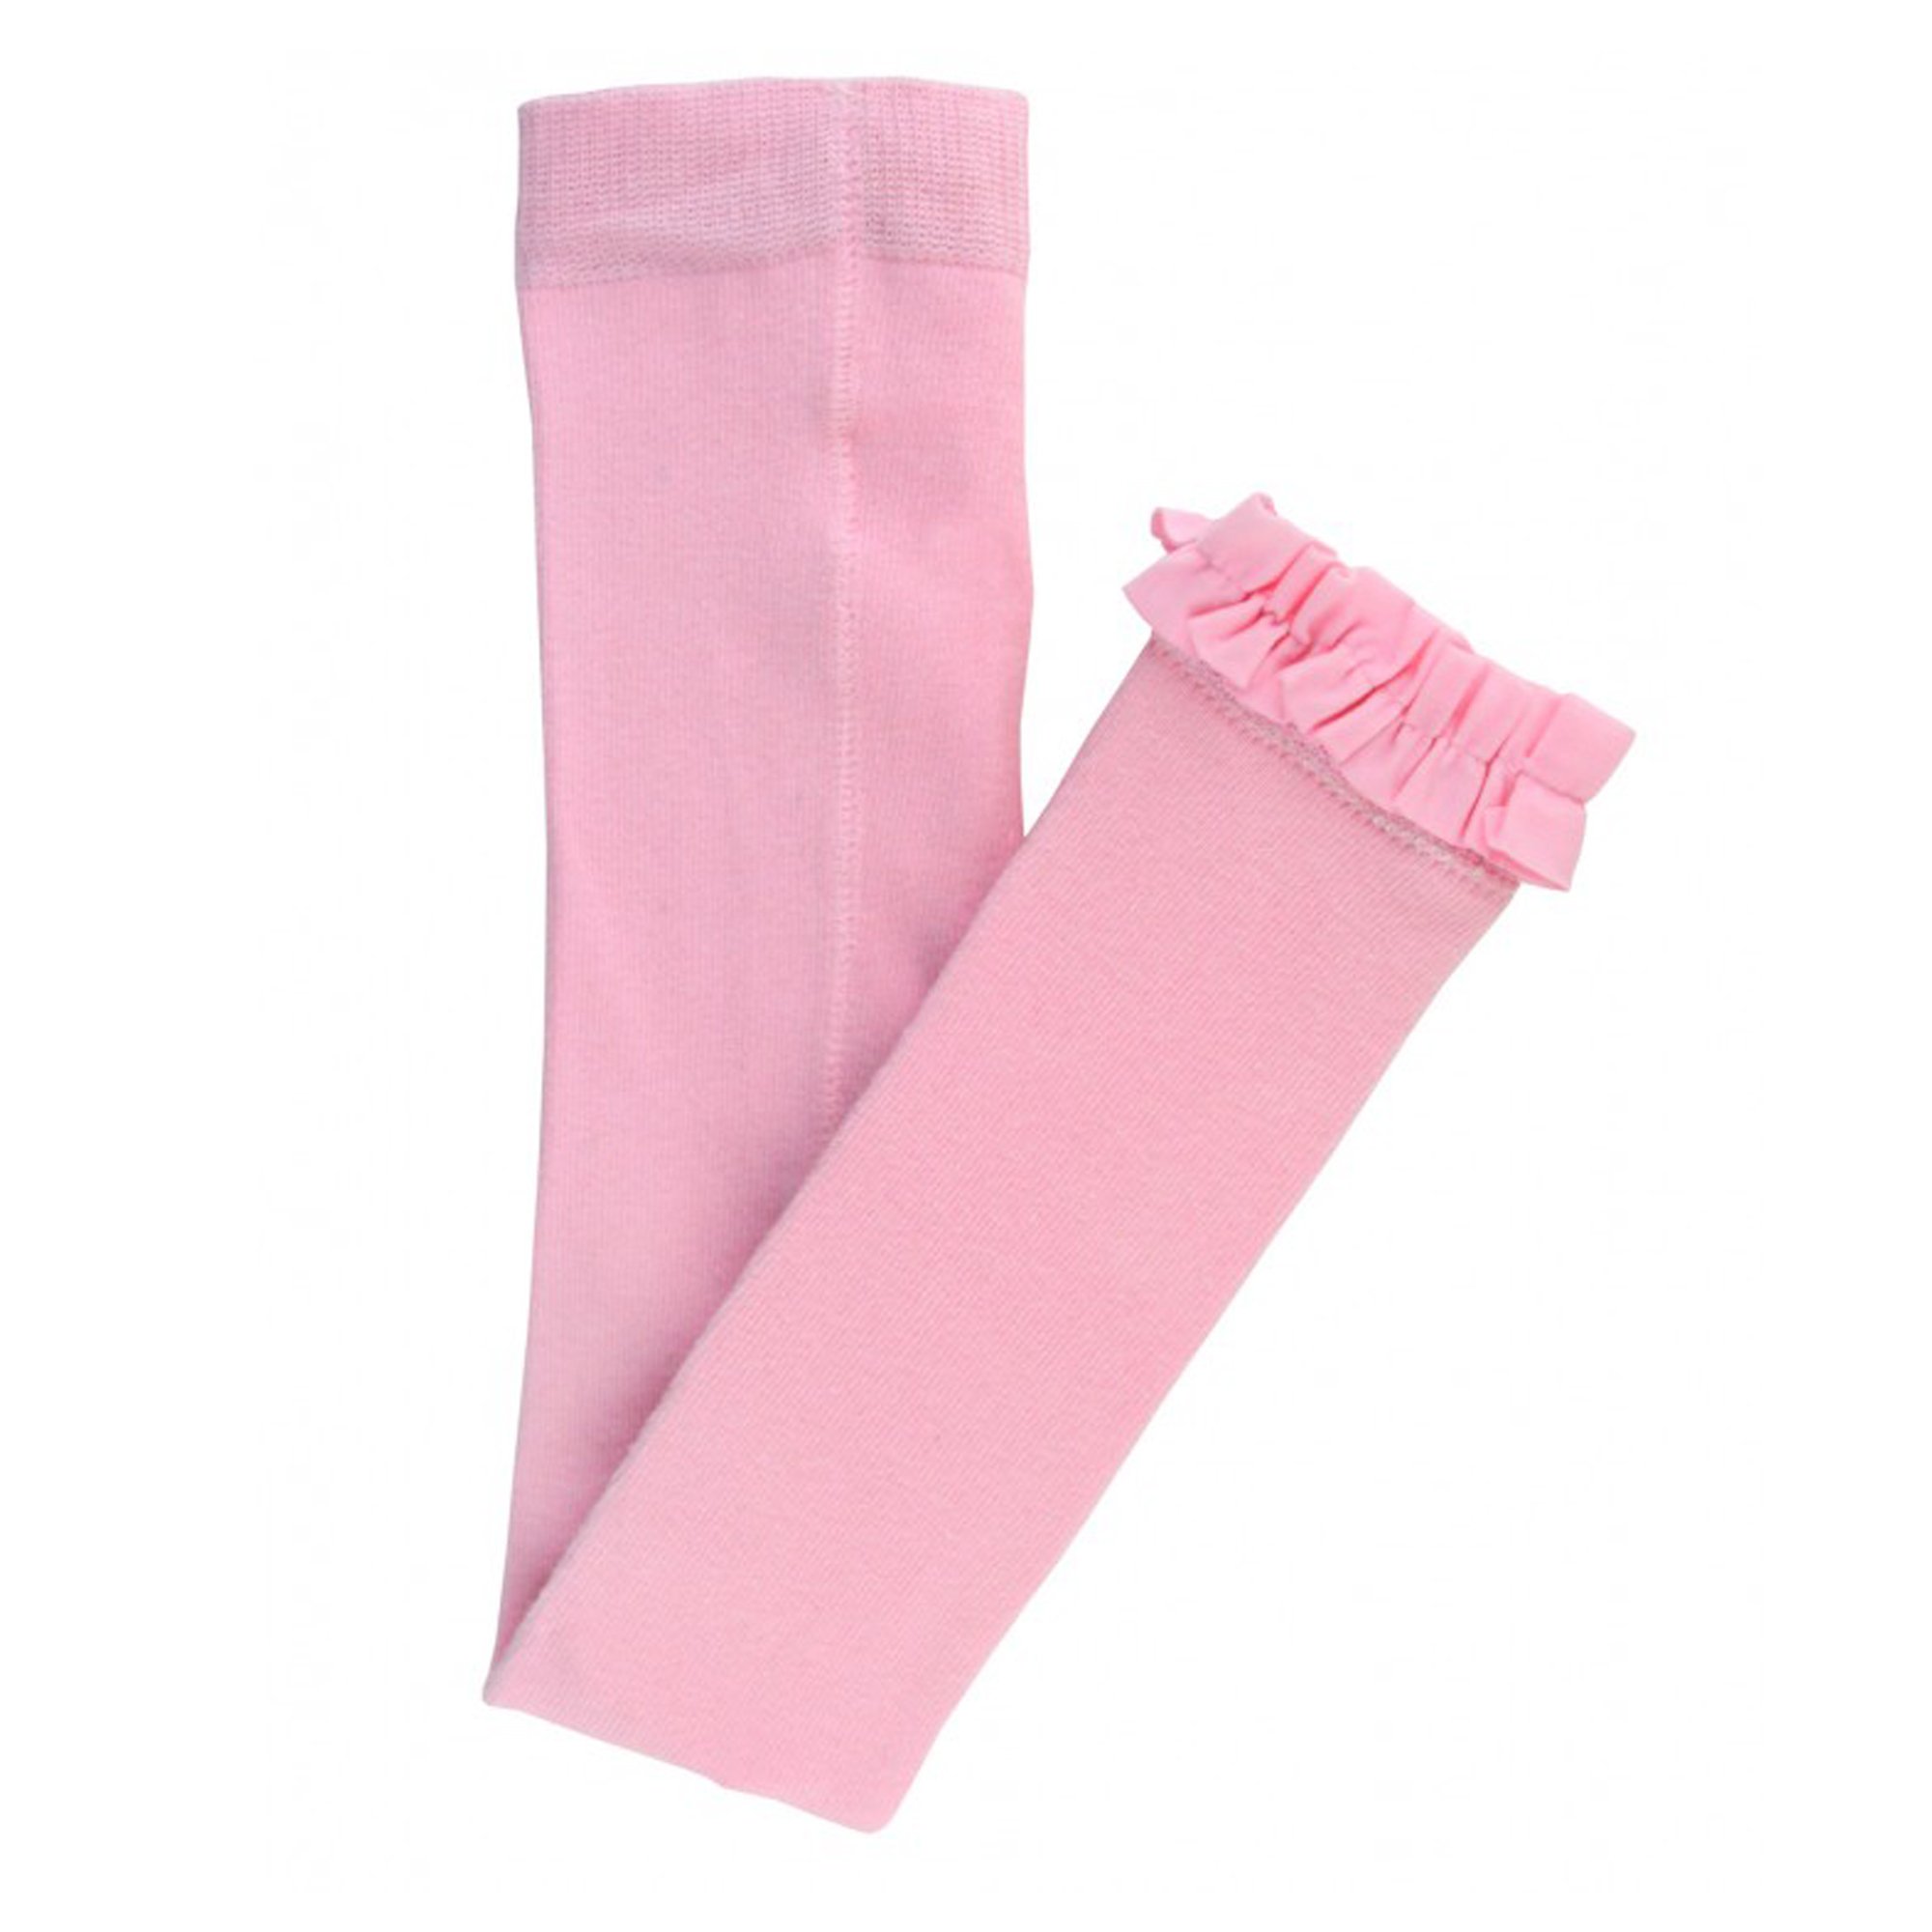 Ruffle Butts Light Pink Diaper Cover